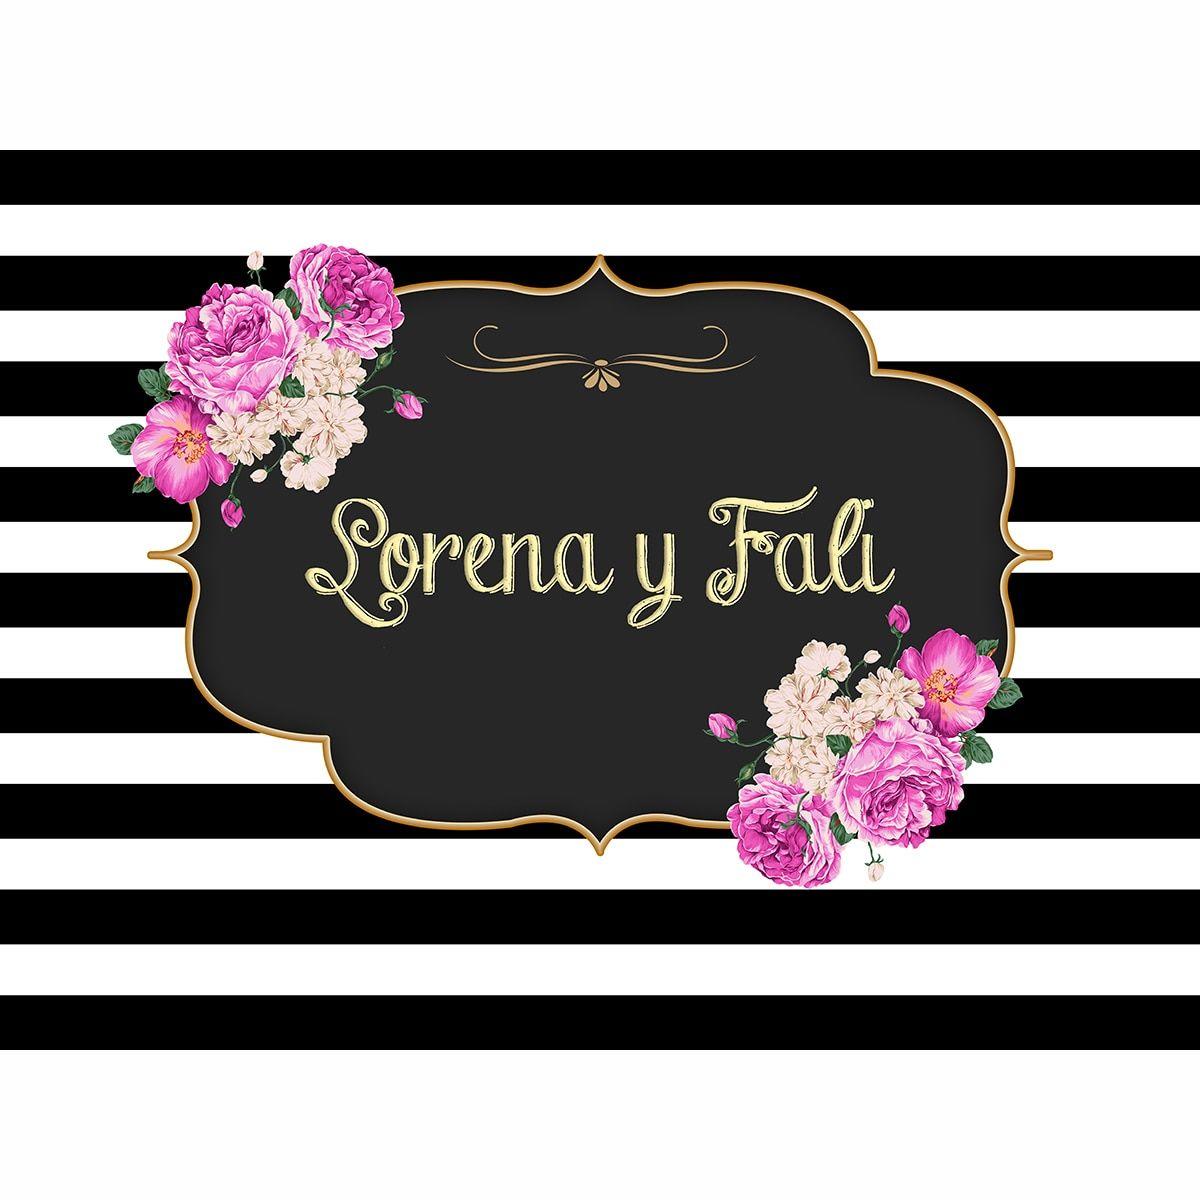 Birthday Flower Logo - Allenjoy new arrivals photo backdrops Black and white striped